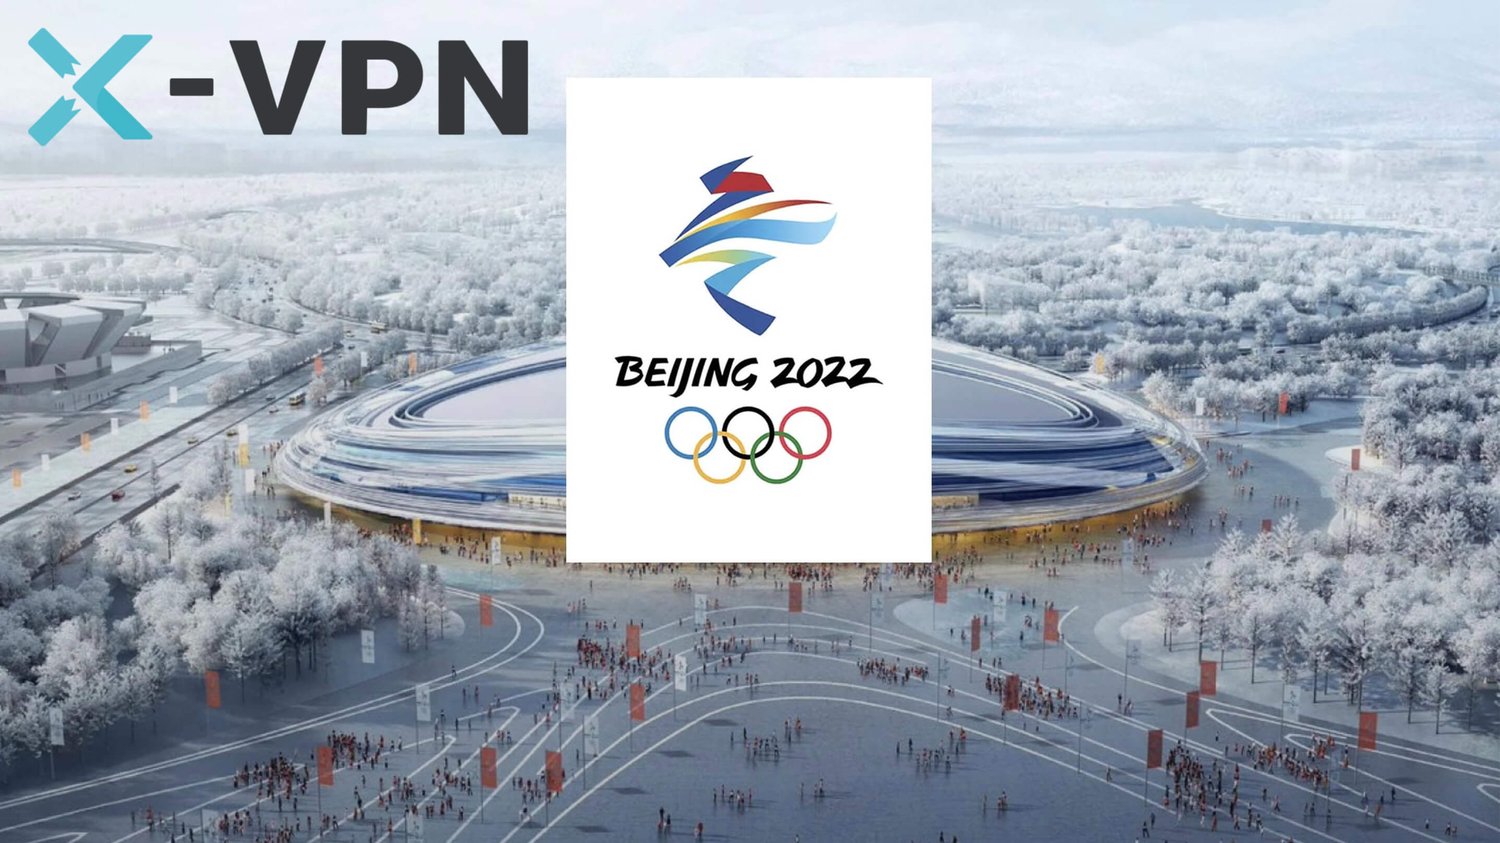 Руководство по предстоящим финалам на Олимпиаде в Пекине 2022